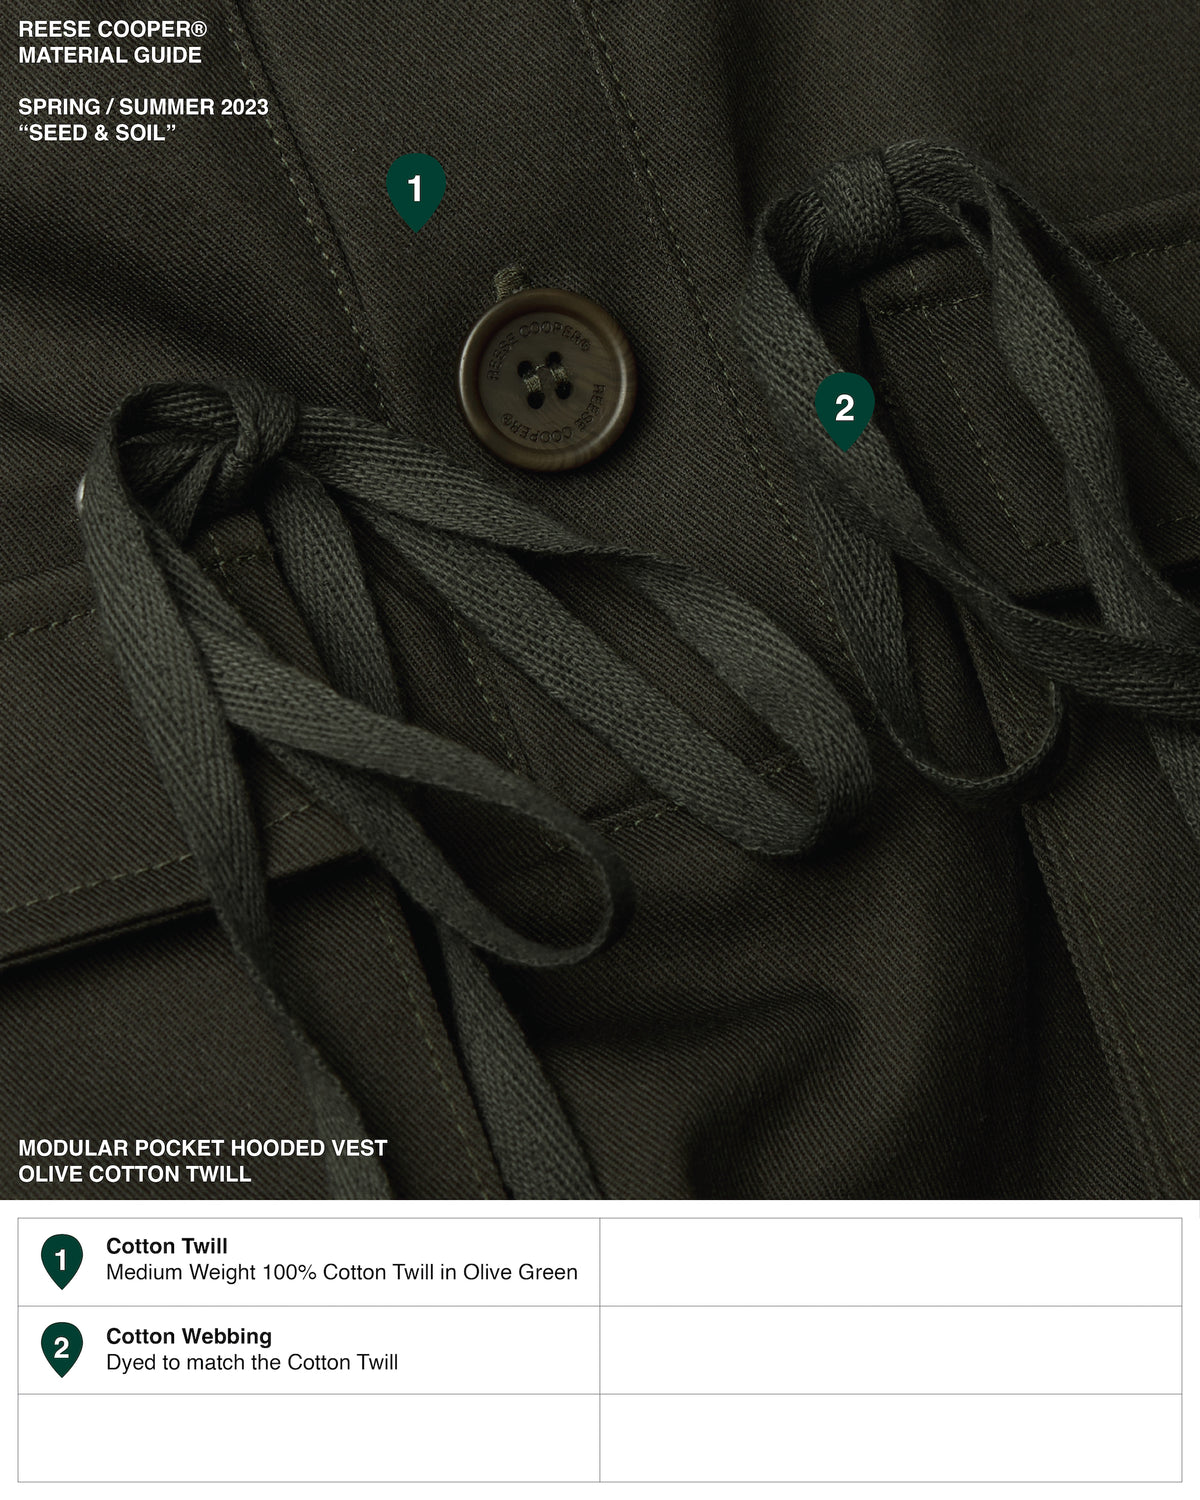 Modular Pocket Cotton Twill Hooded Vest in Olive